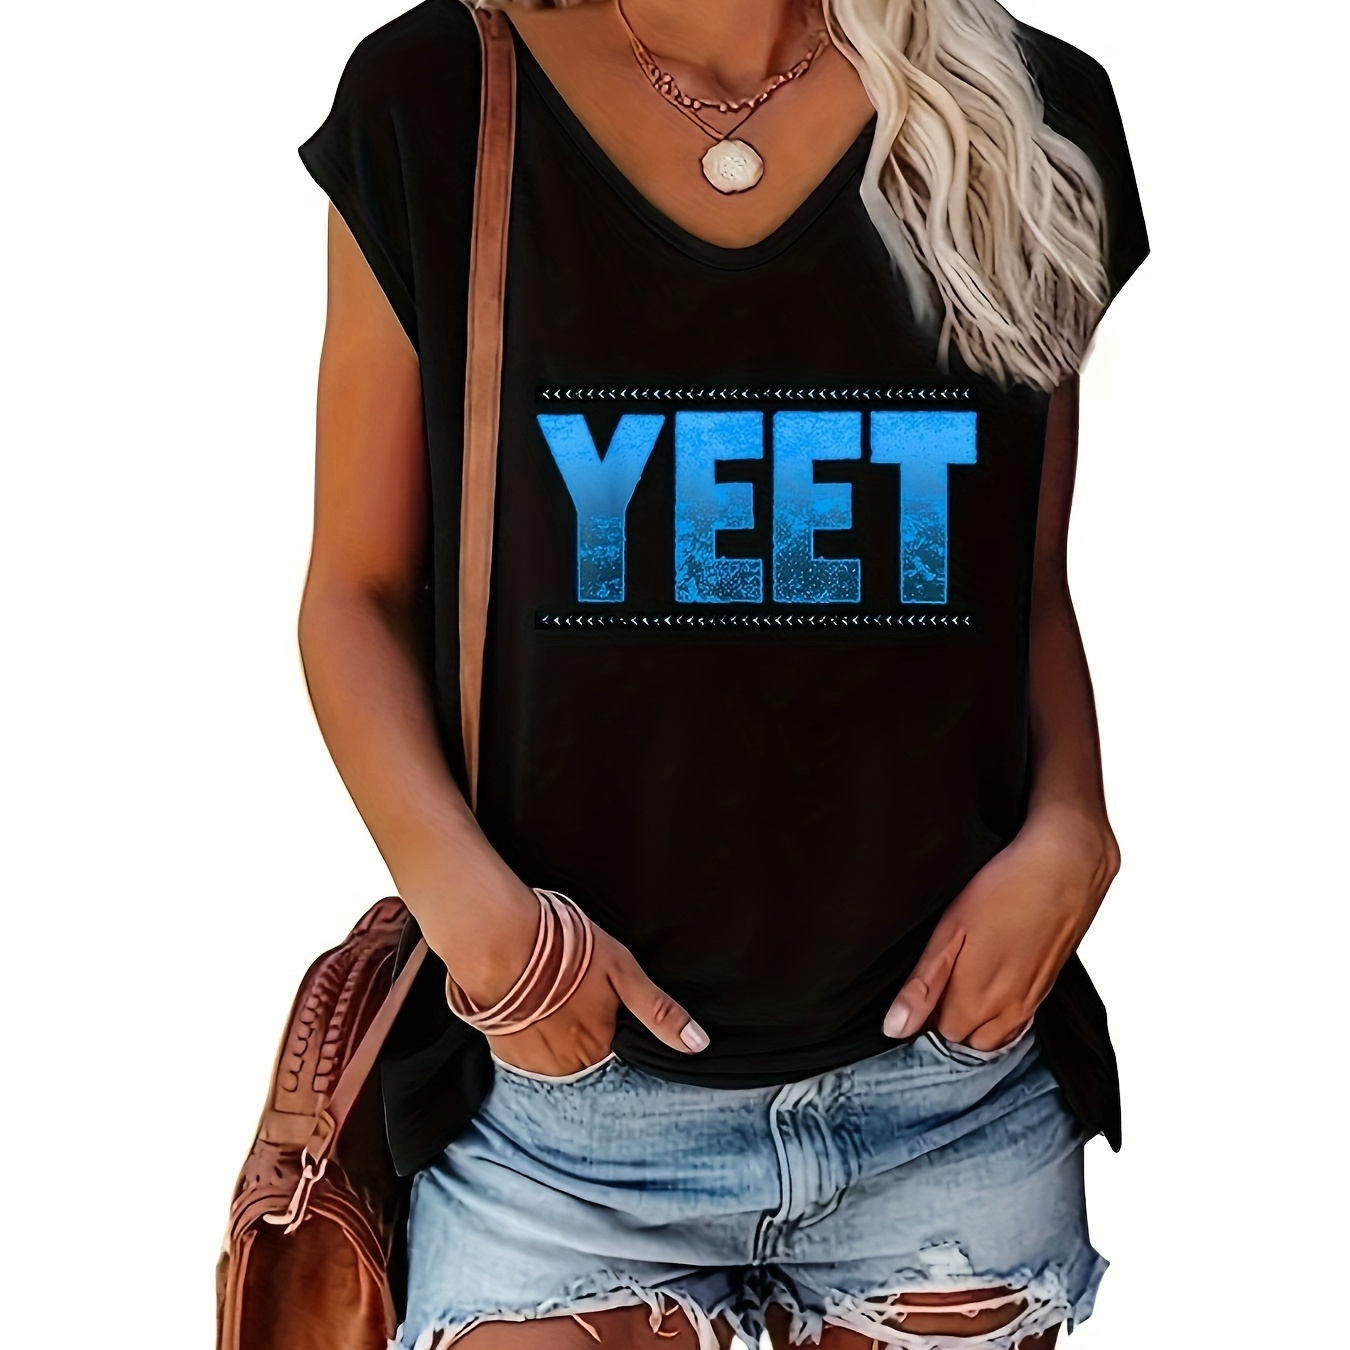 

Yeet Letter Print V-neck Vest, Summer Casual Outdoor Sports Sleeveless Top, Women's Vest